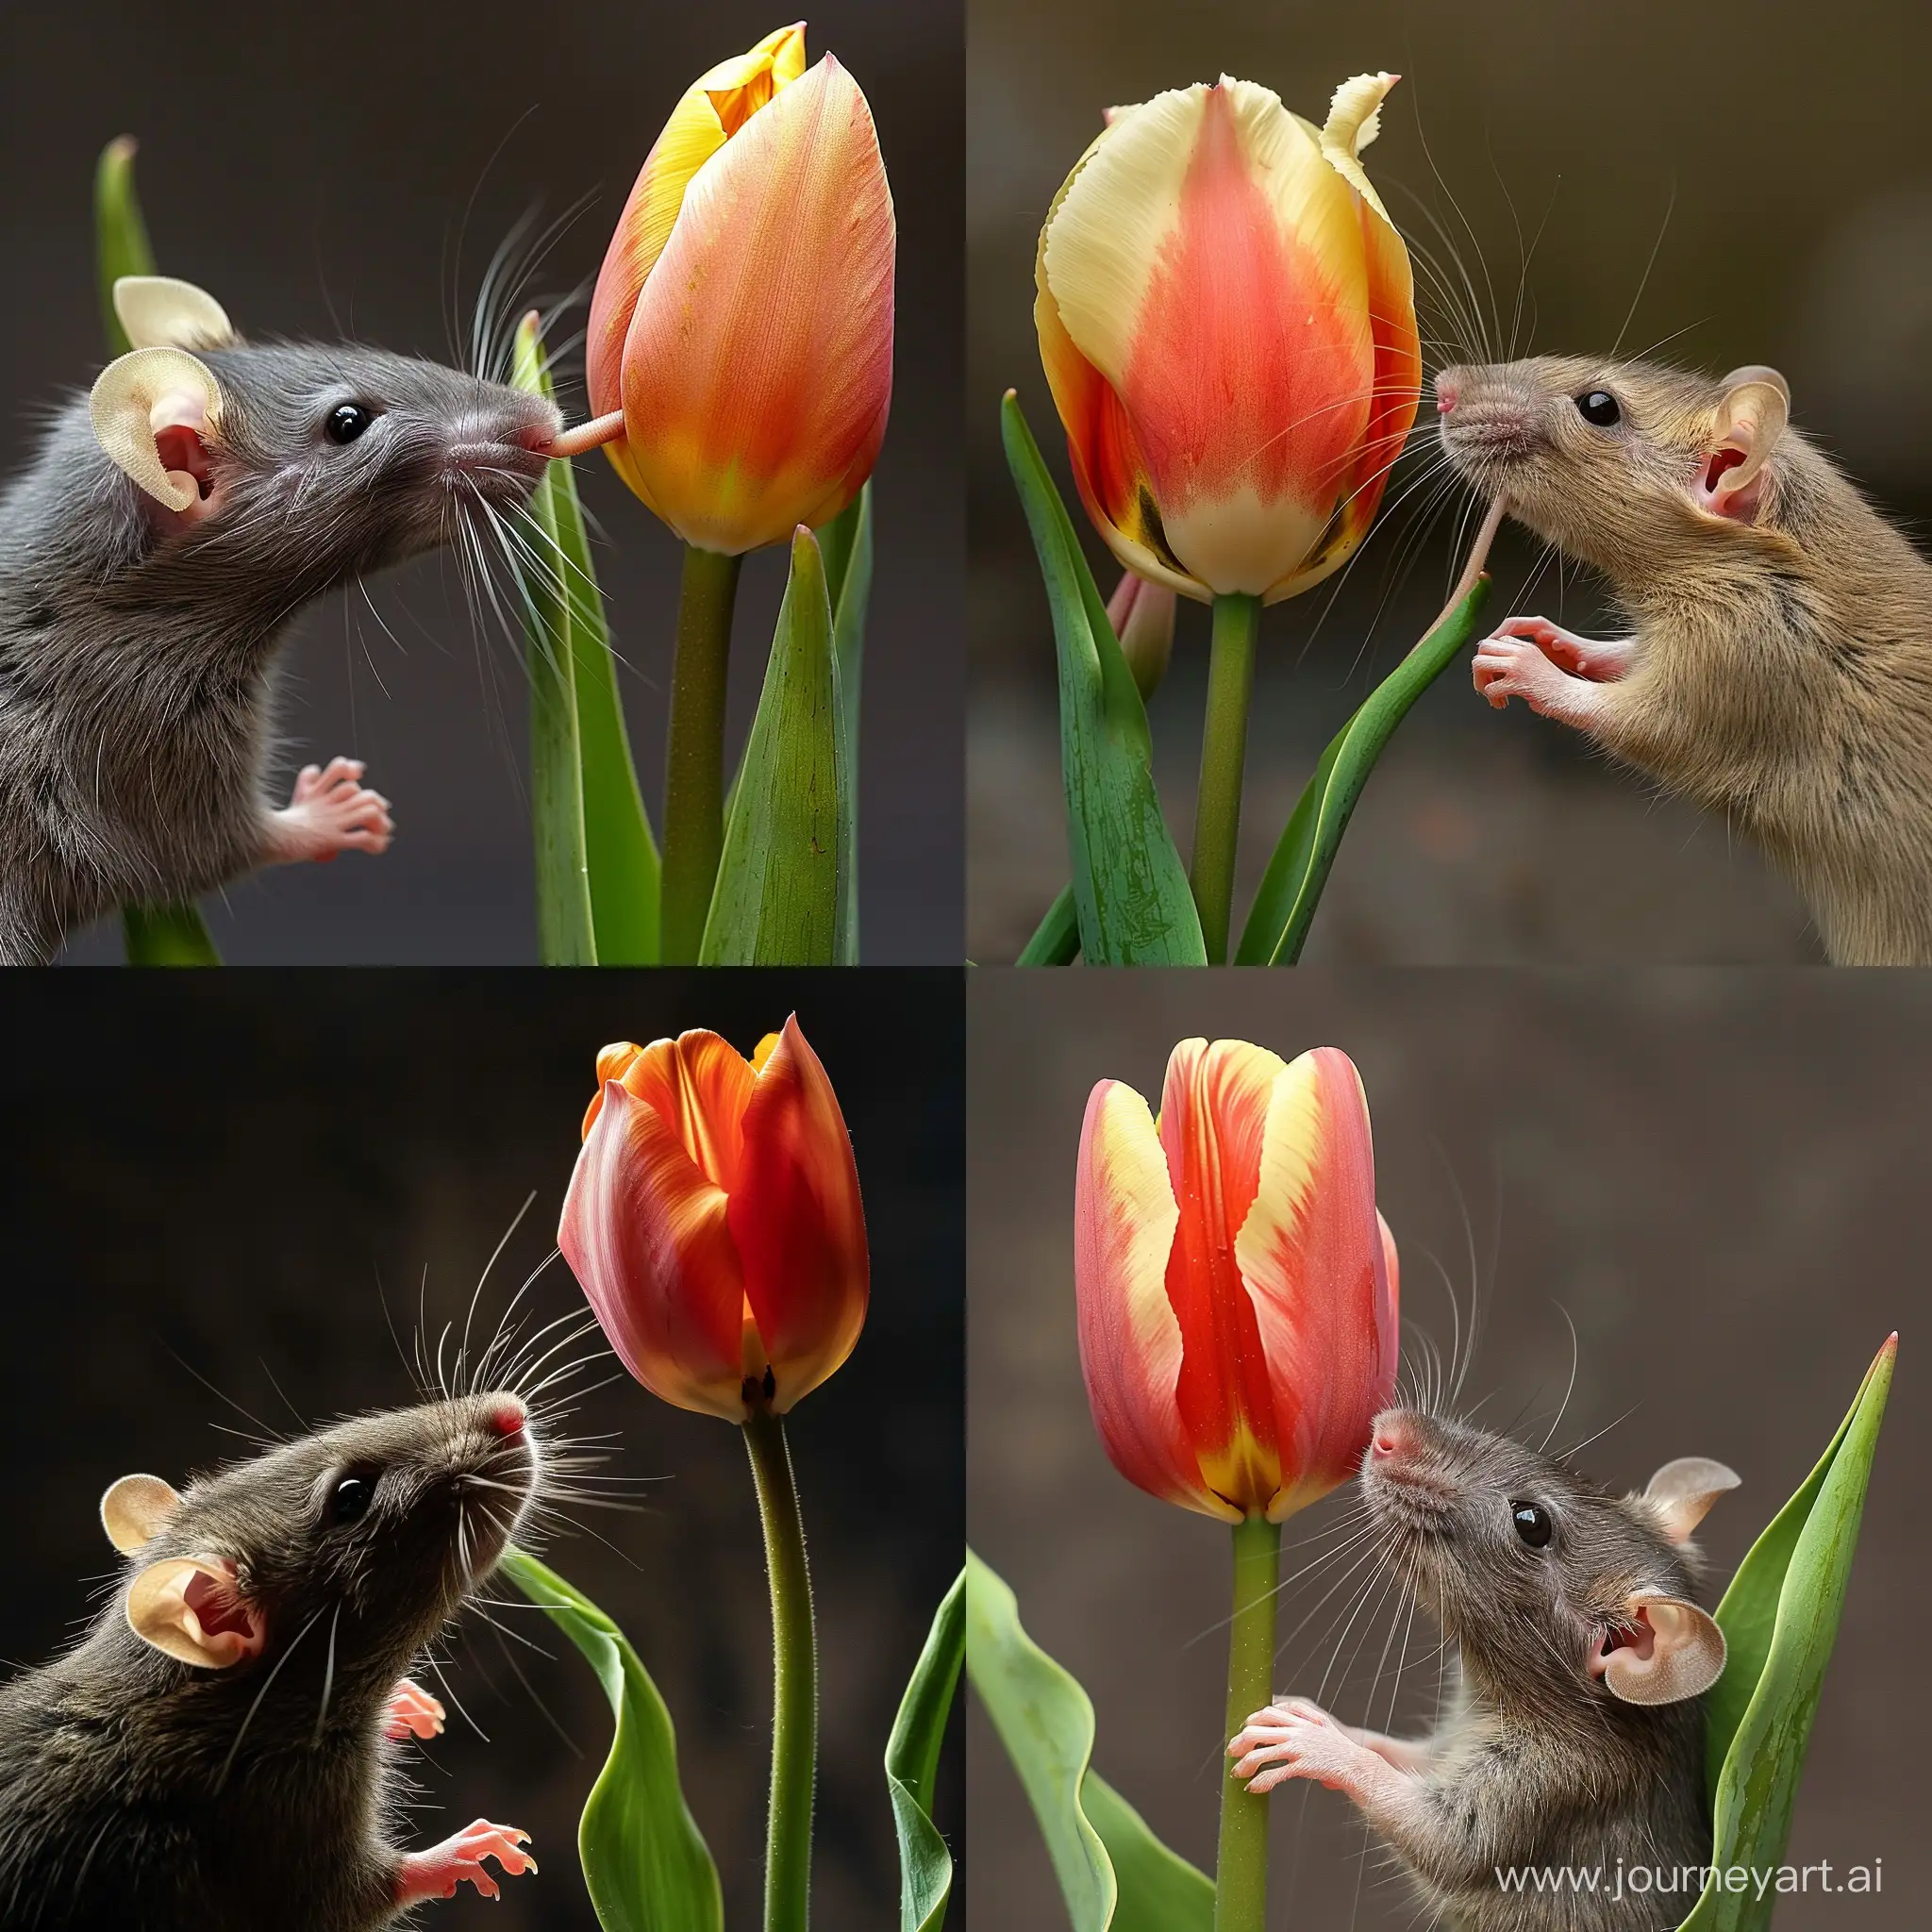 Curious-Rat-Sniffing-a-Tulip-in-Vibrant-CloseUp